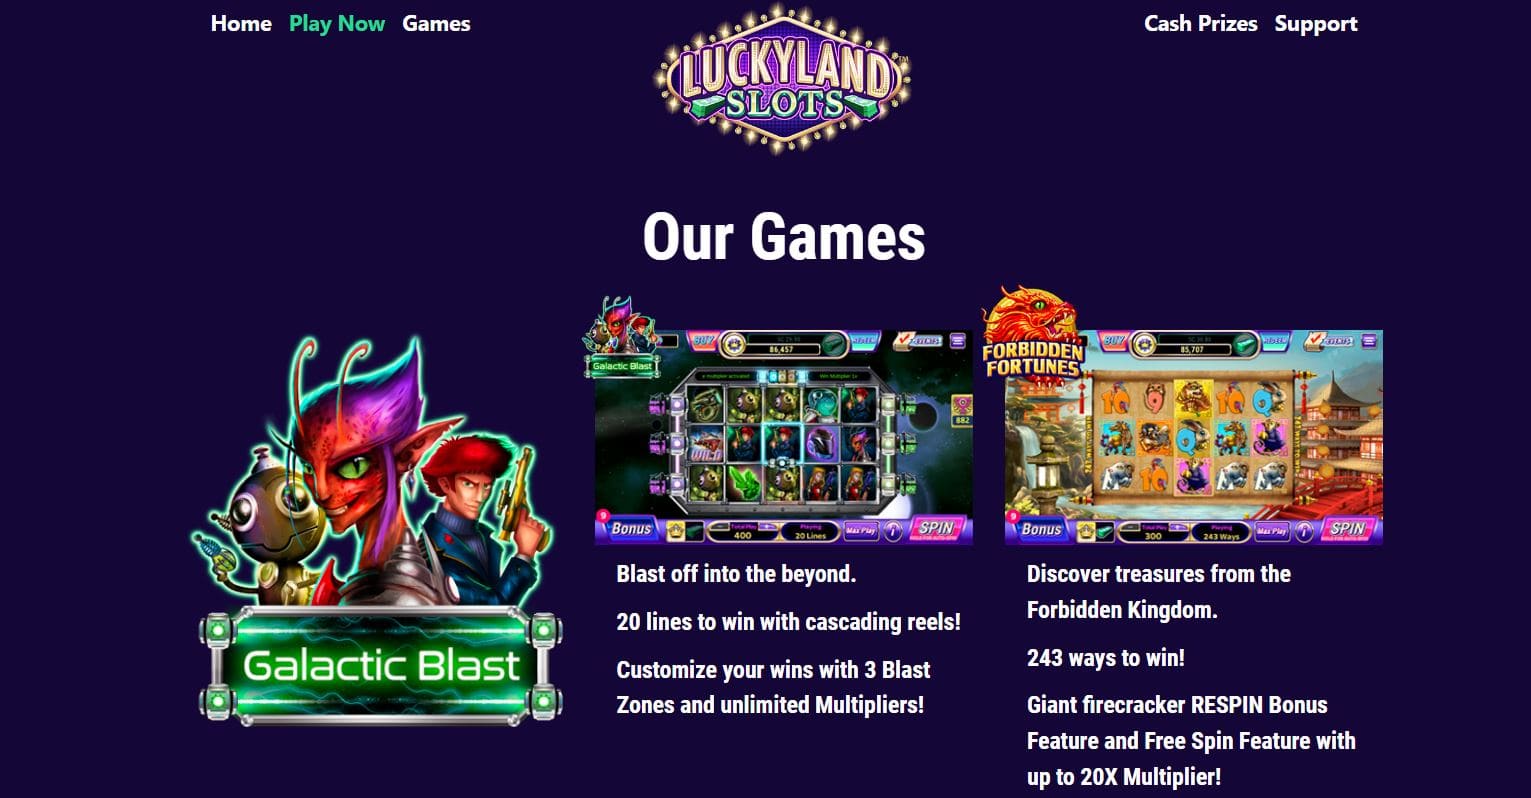 LuckyLand Slots Games